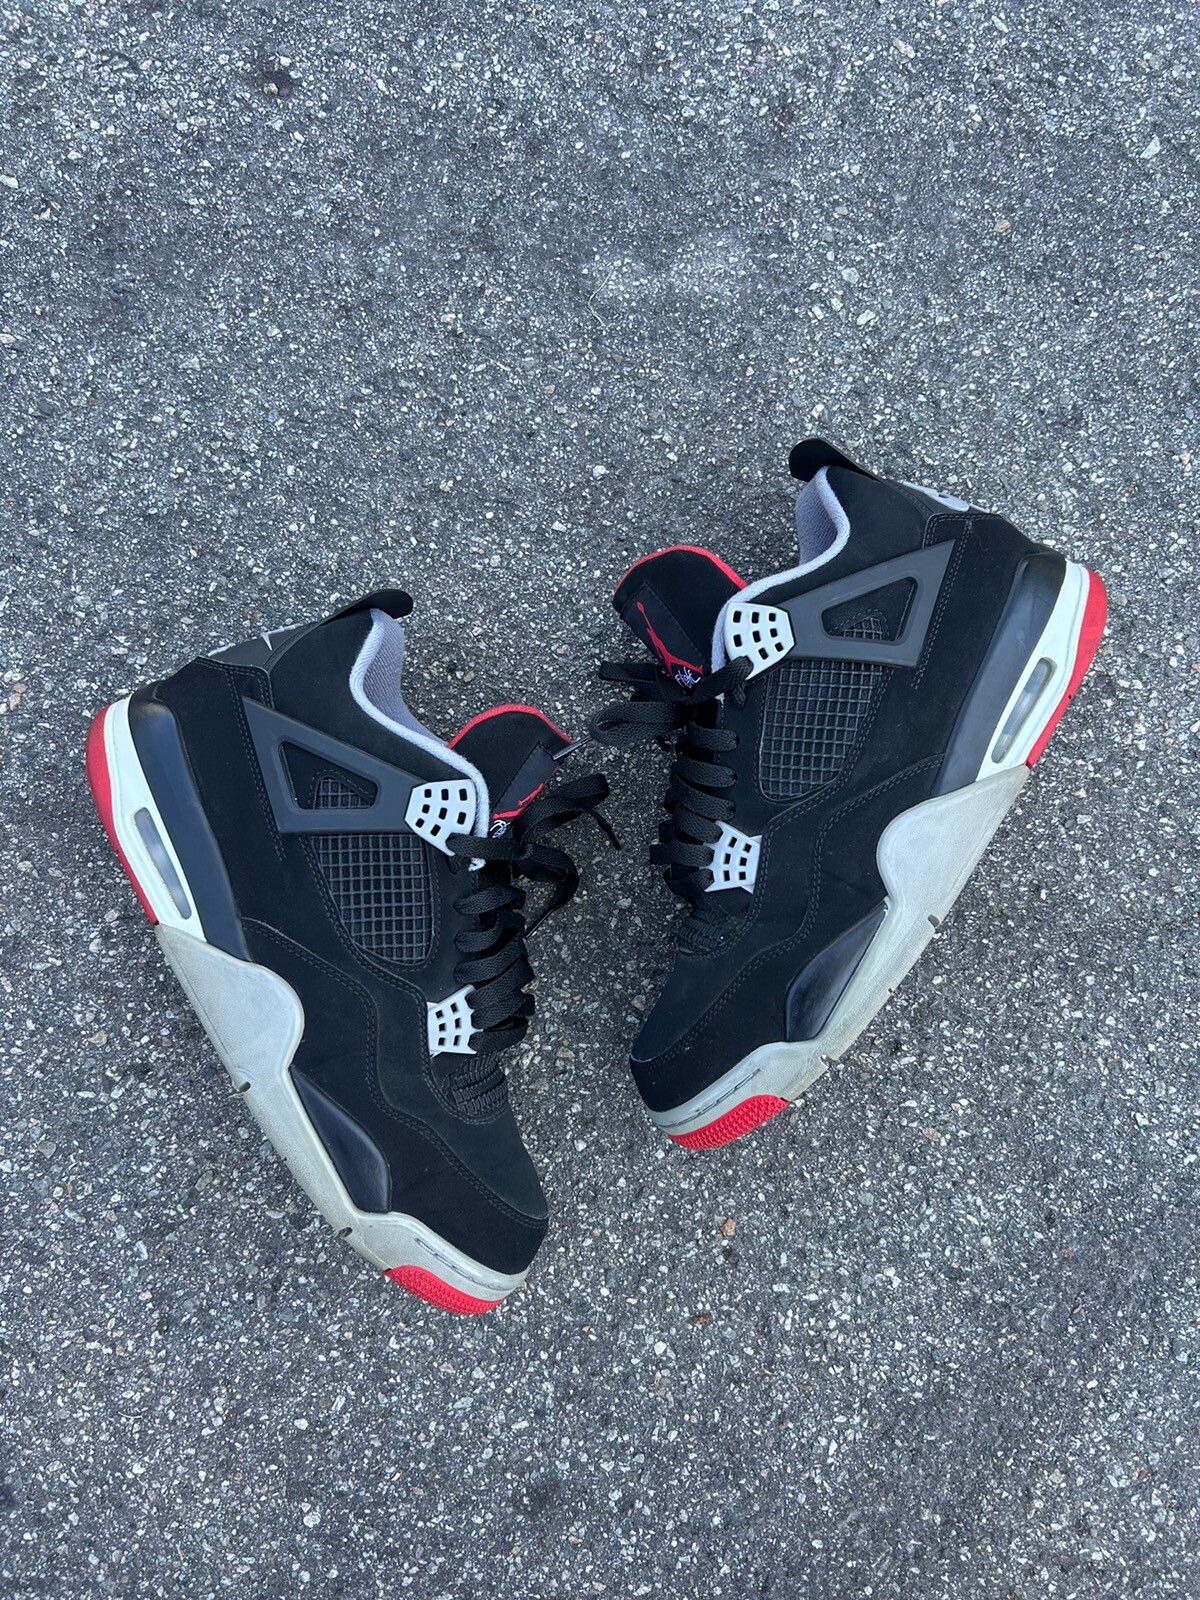 Pre-owned Jordan Brand 4 Retro “ Bred “ (2019) Shoes In Black